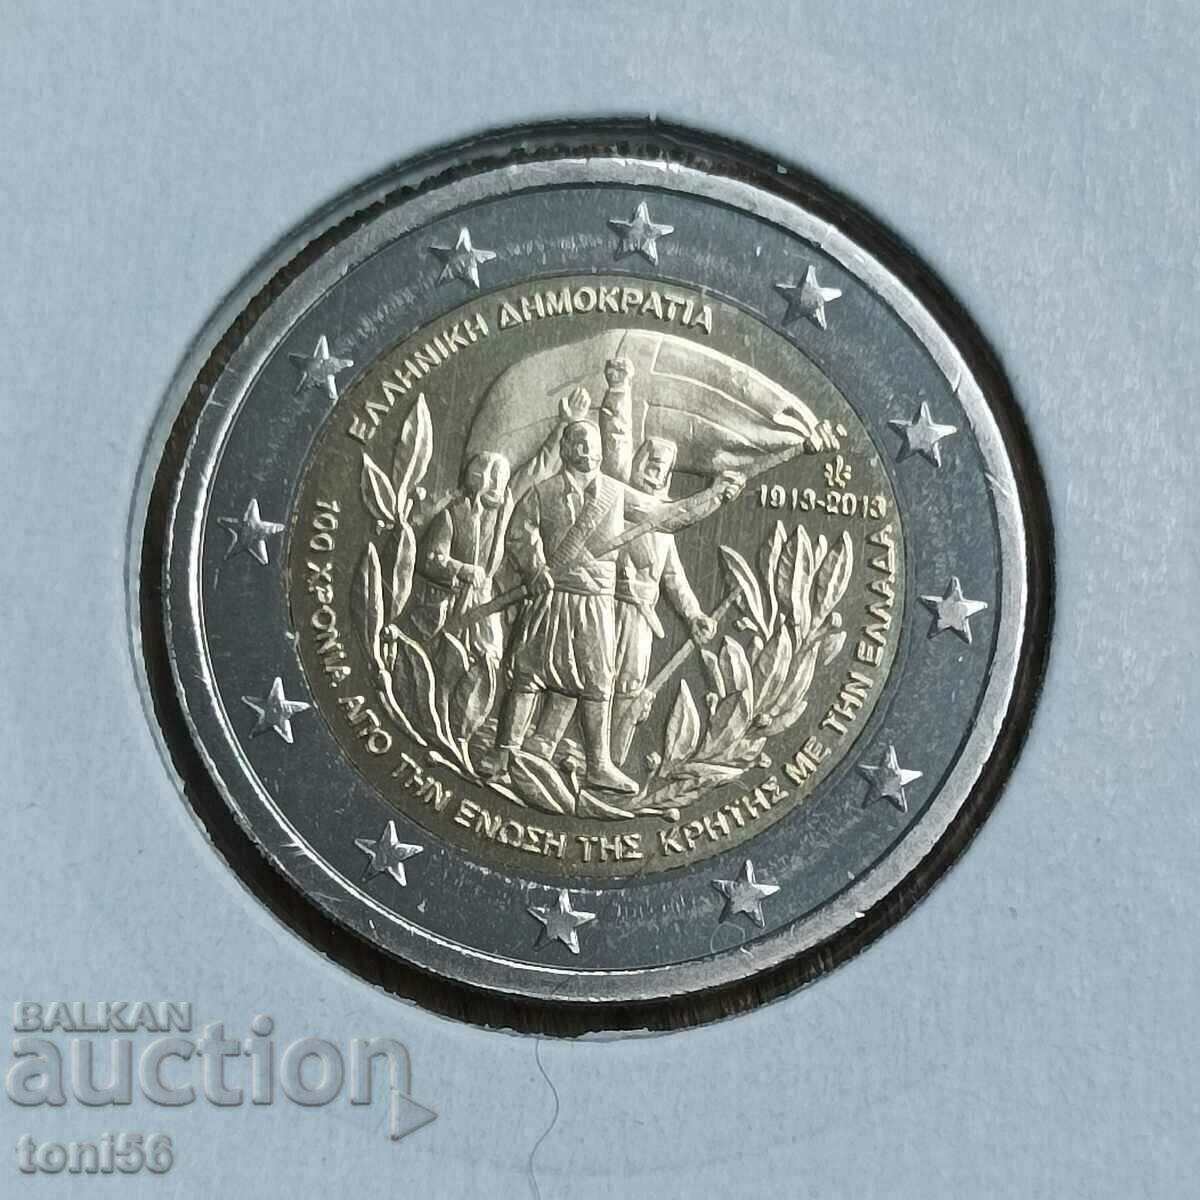 Гърция 2 евро 2013 - Крит